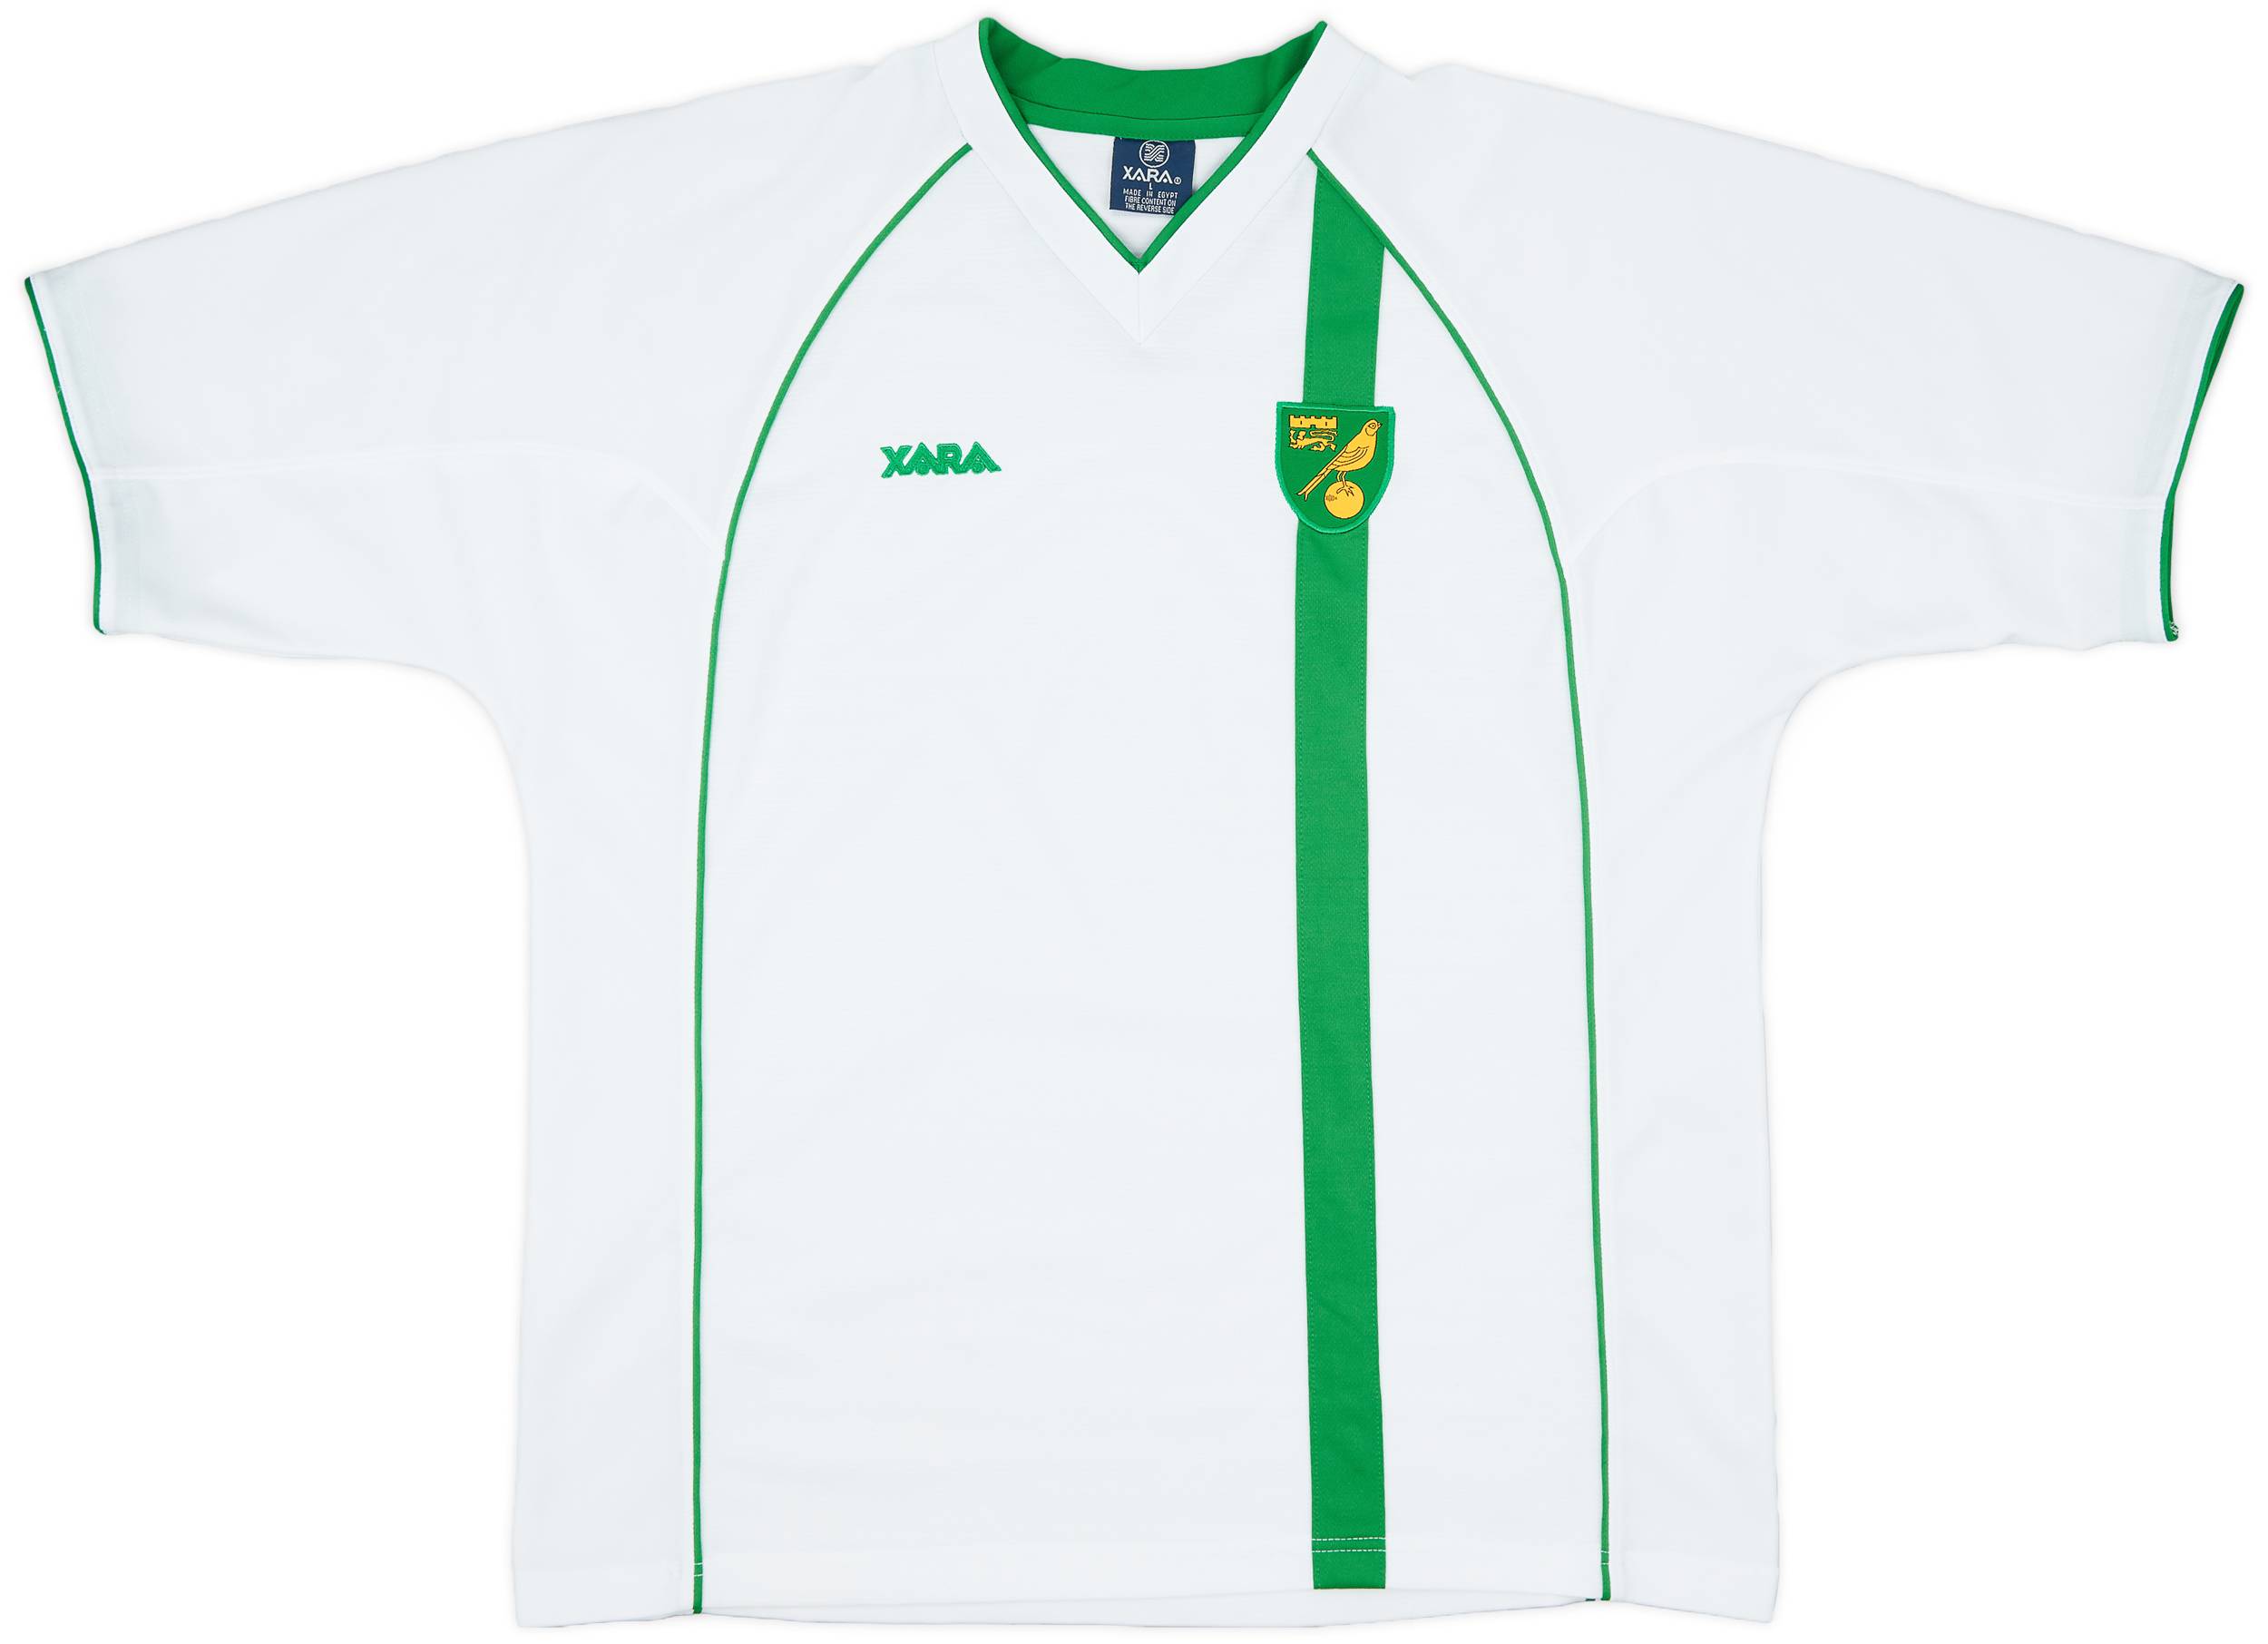 2001-03 Norwich City Xara Training Shirt - 8/10 - (L)